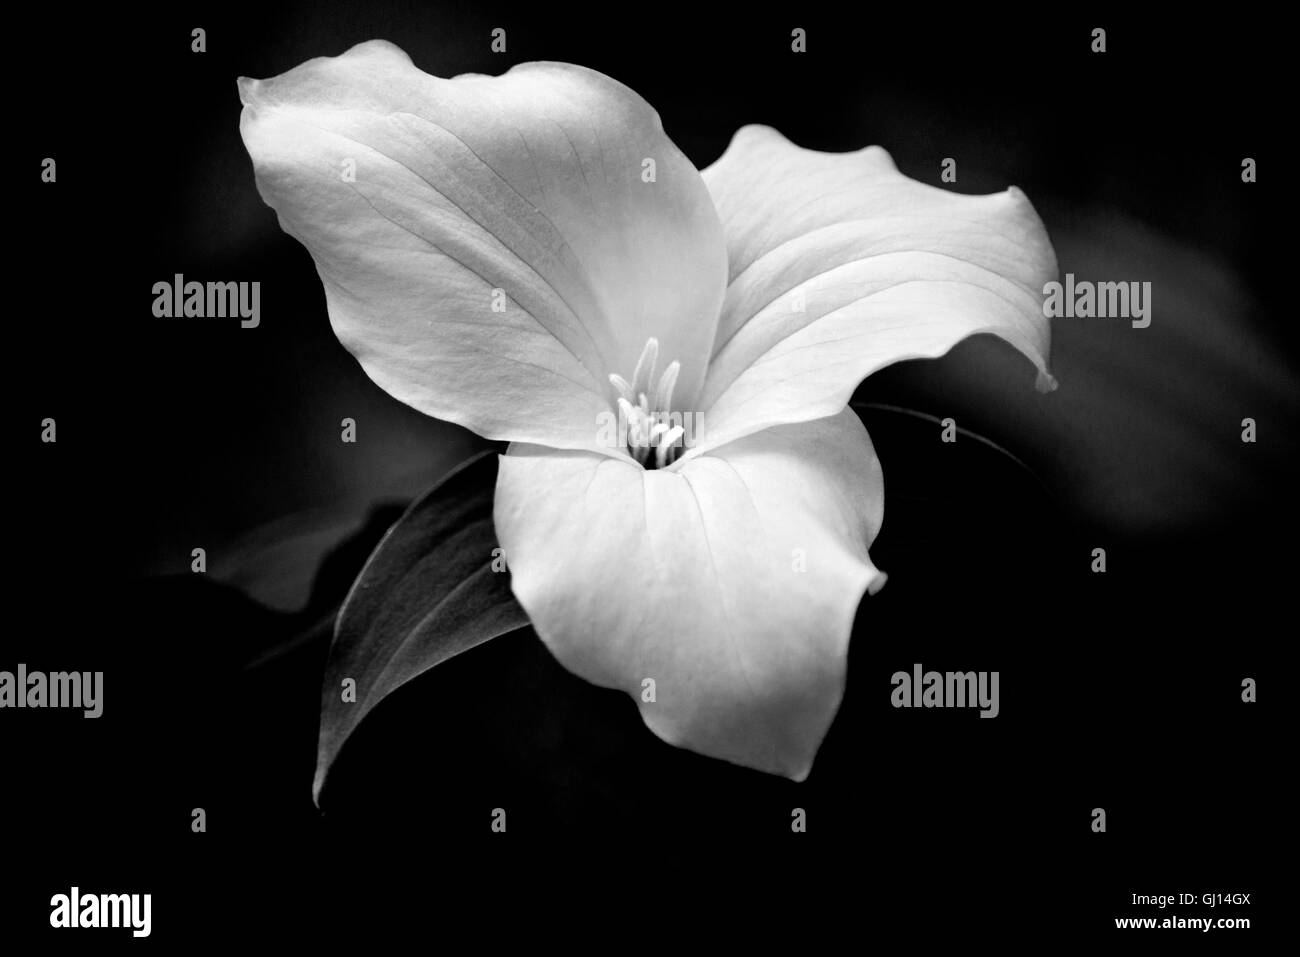 Trillium flower black and white close pp Stock Photo